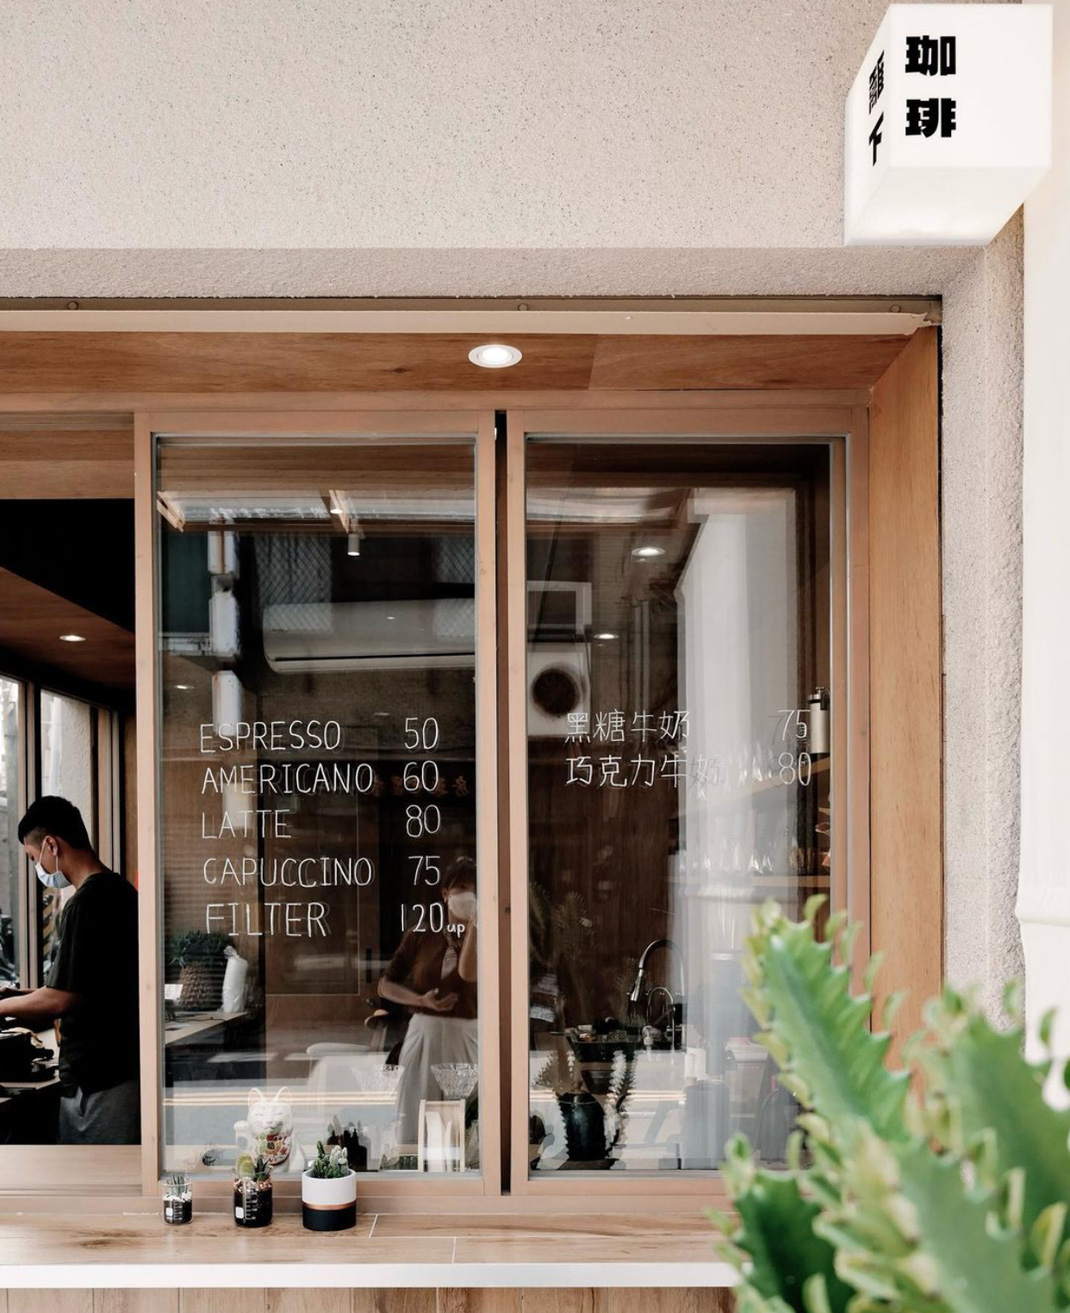 Roamer’s home coffee 离下咖啡 台湾 咖啡店 袖珍店 亚克力 logo设计 vi设计 空间设计